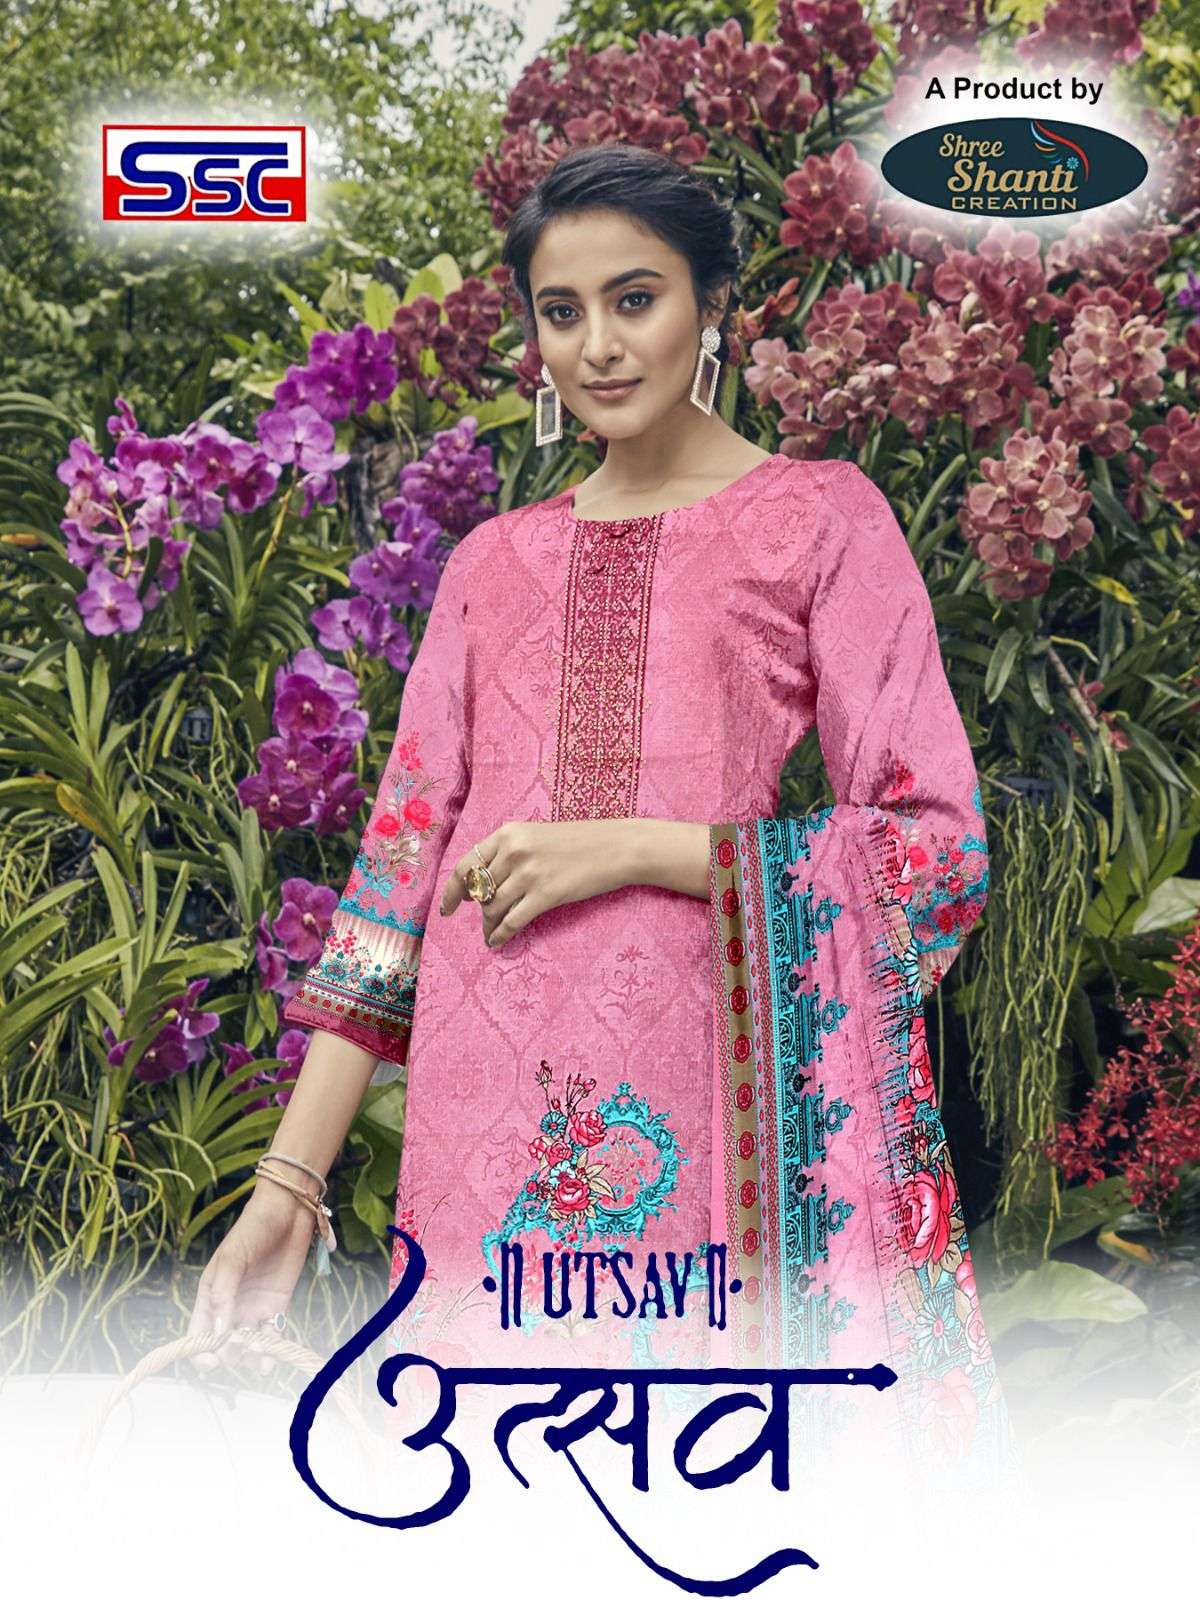 Utshav designer cotton suit by ssc wholesaler of designer suits